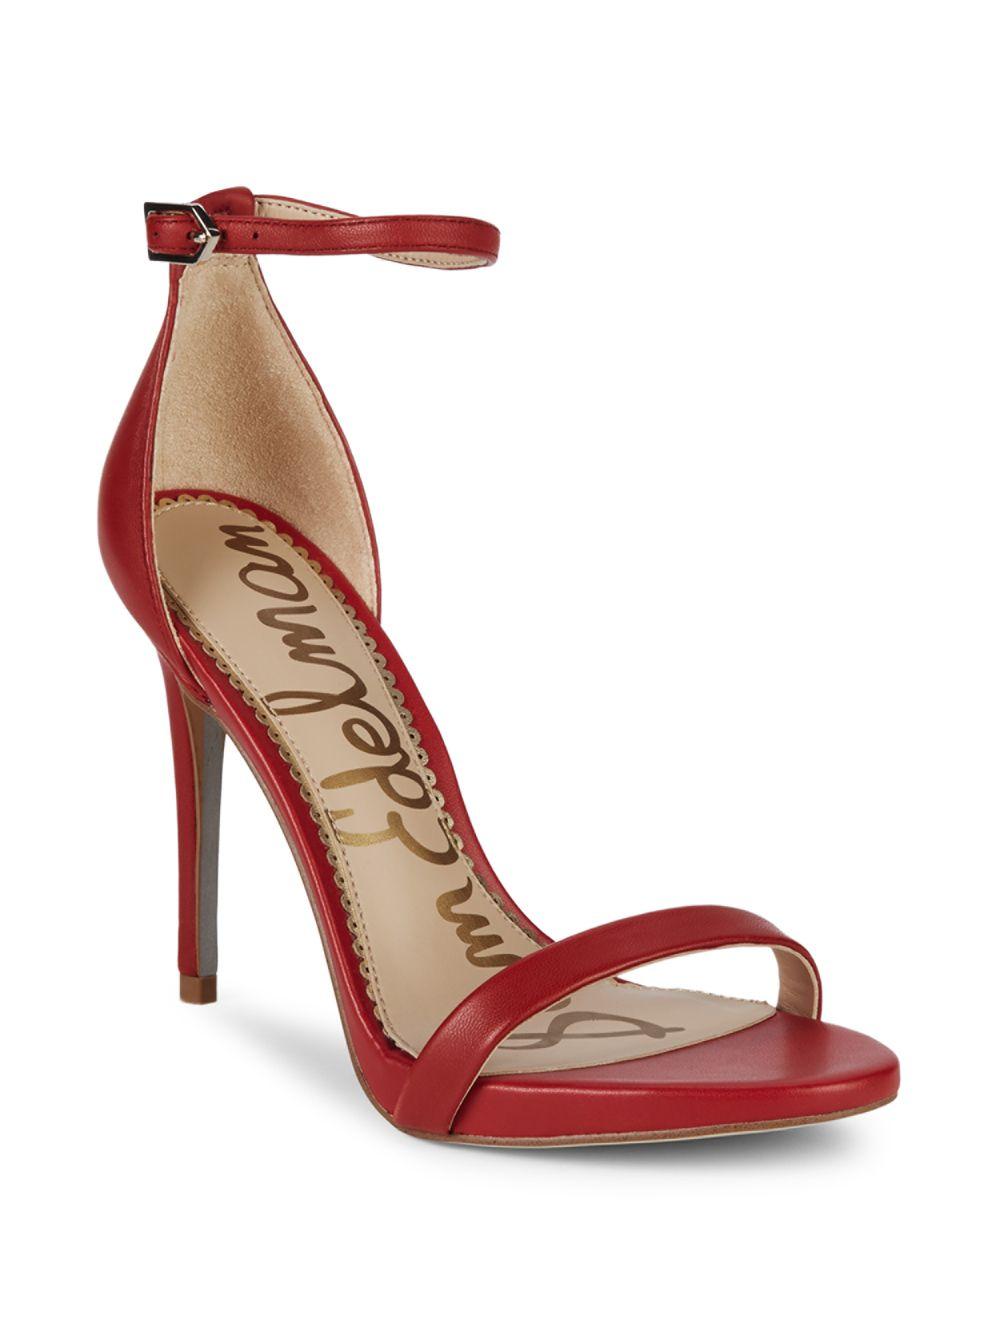 Sam Edelman Ariella Leather D'orsay High Heel Sandals in Red - Lyst